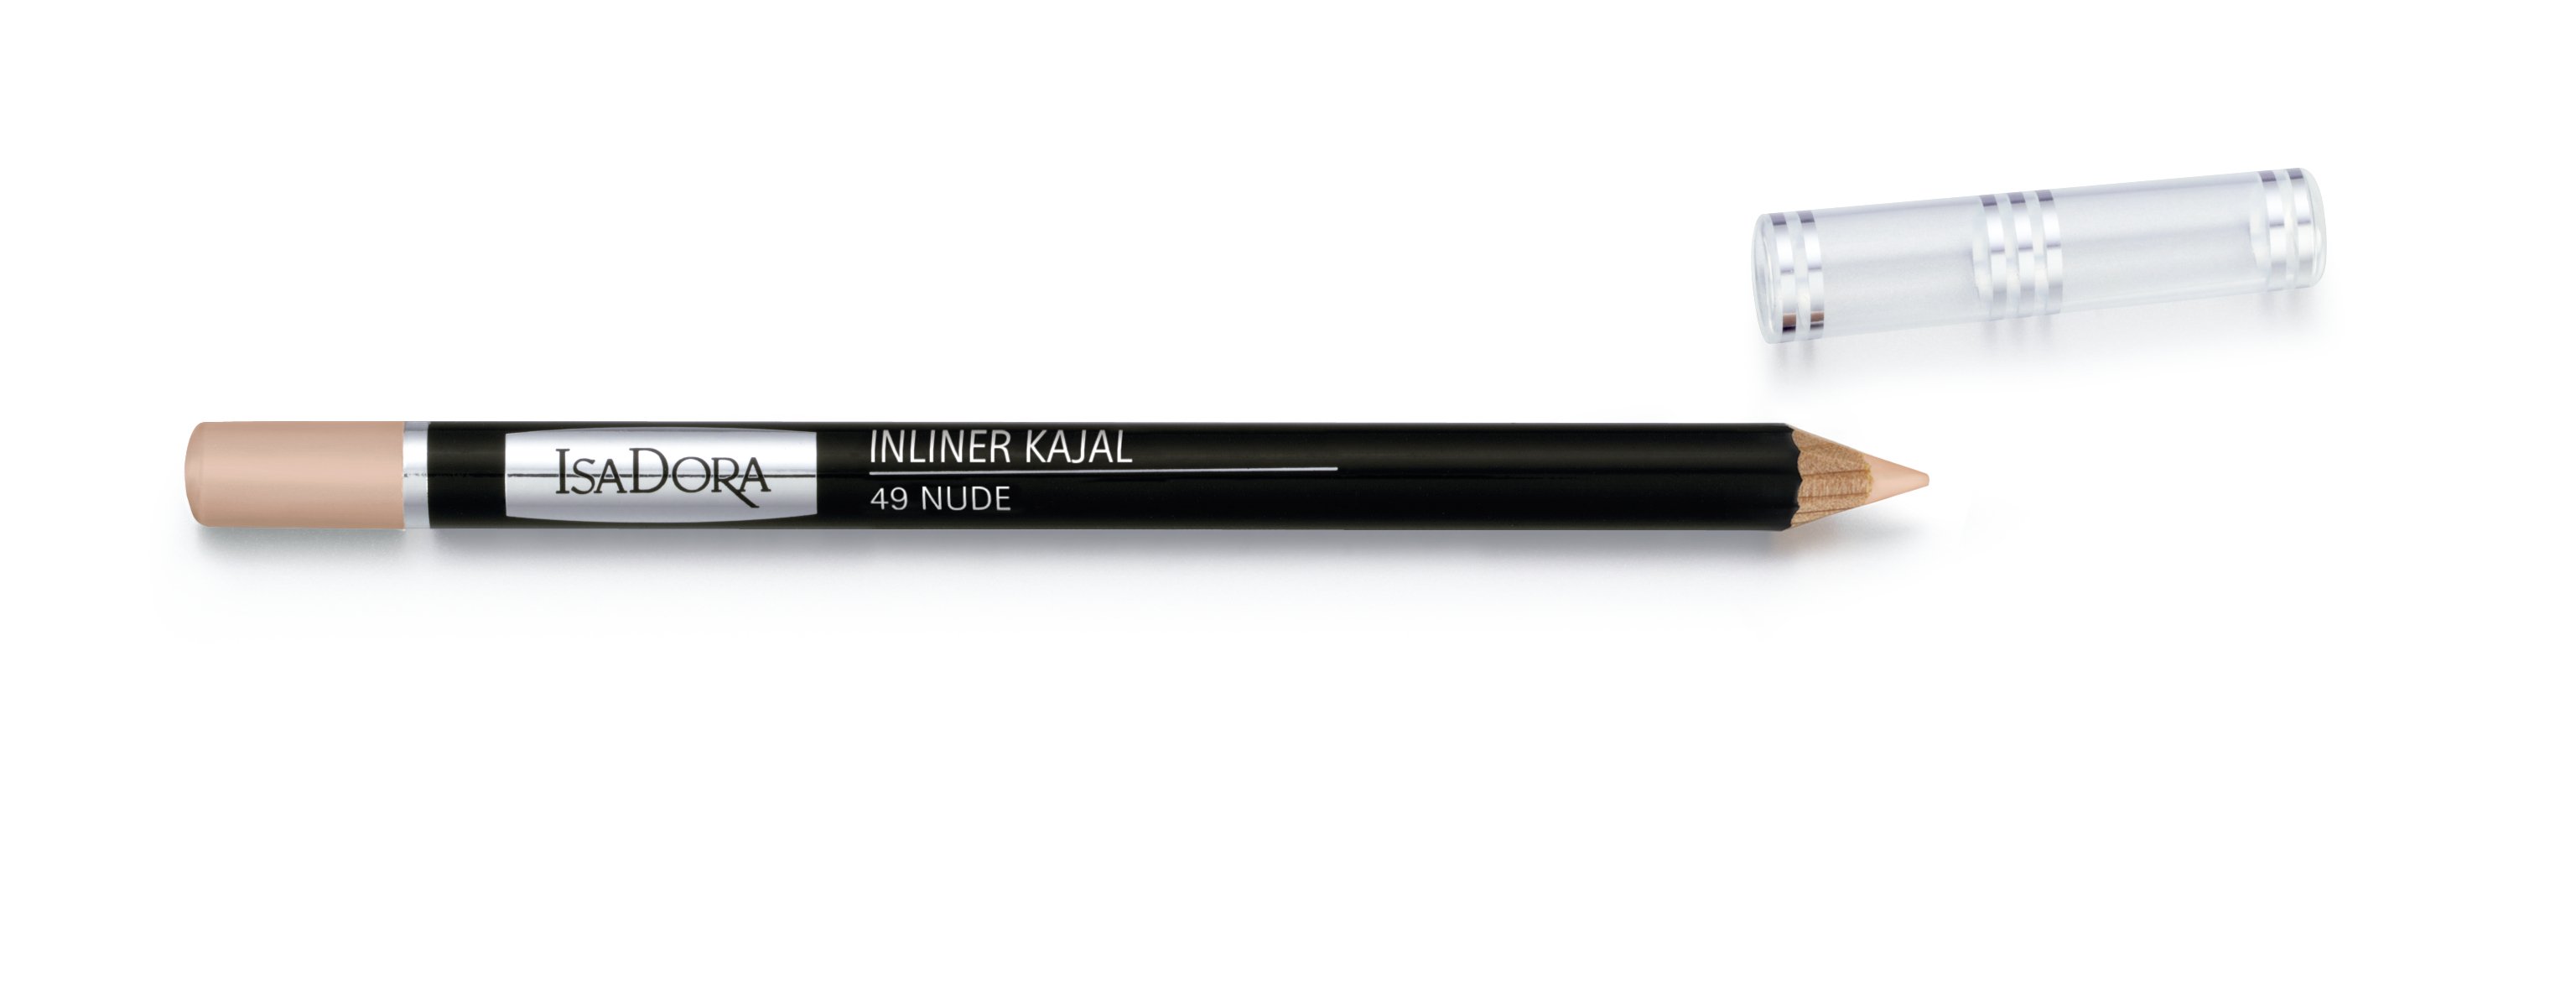  IsaDora INLINER KAJAL WATERLINE - Eyeliner - 49 Nude